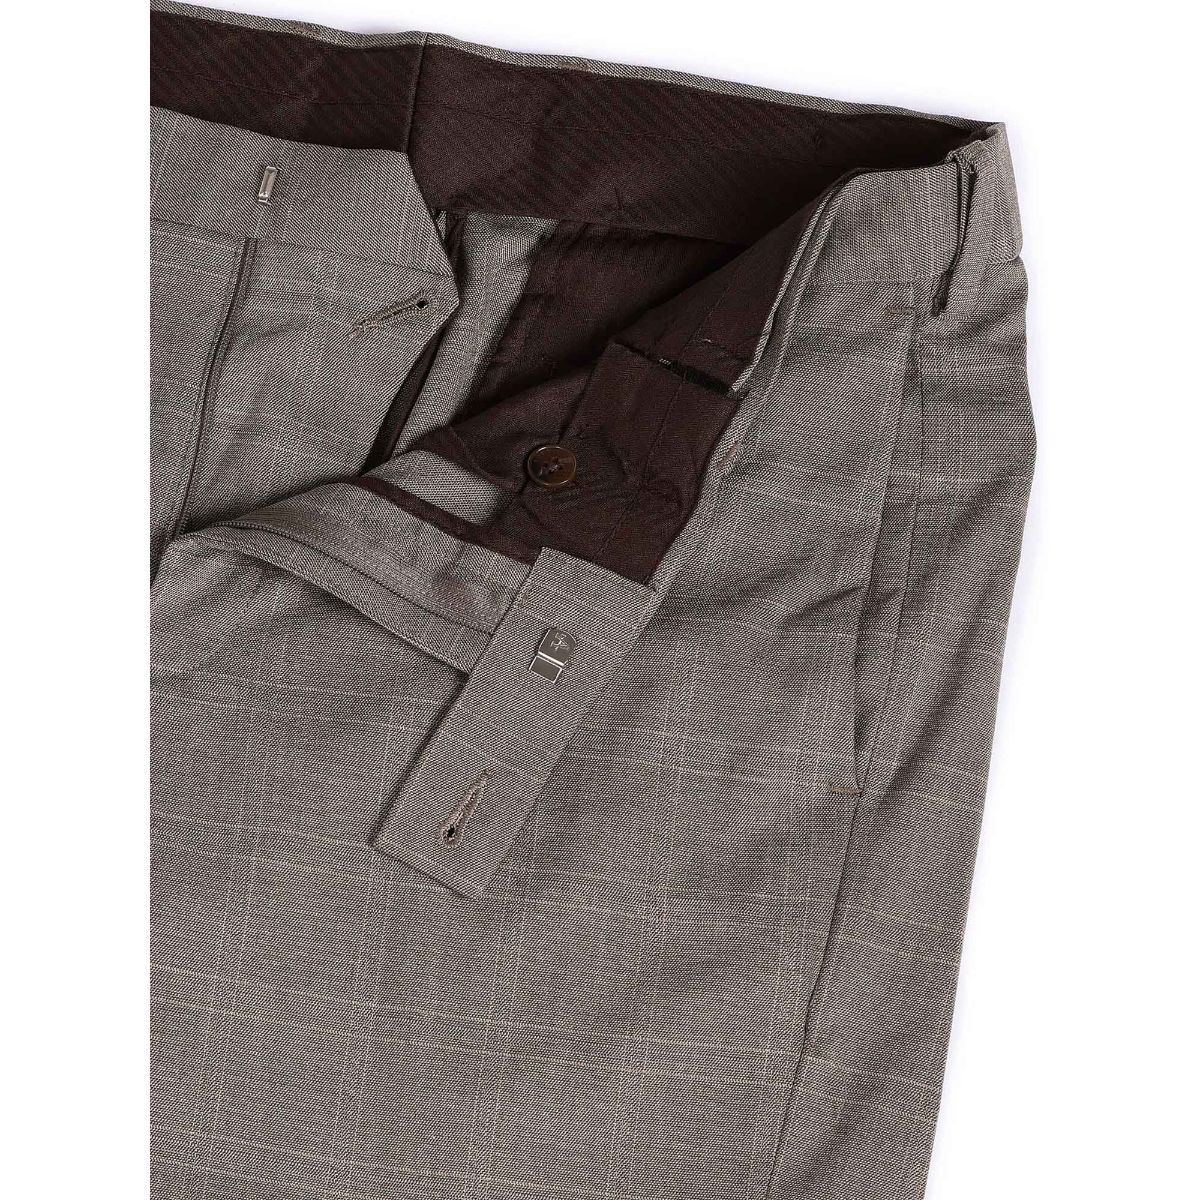 Buy Arrow Men's Skinny Autoflex Knitted Trousers (ASAFTR2524_Dark Grey at  Amazon.in